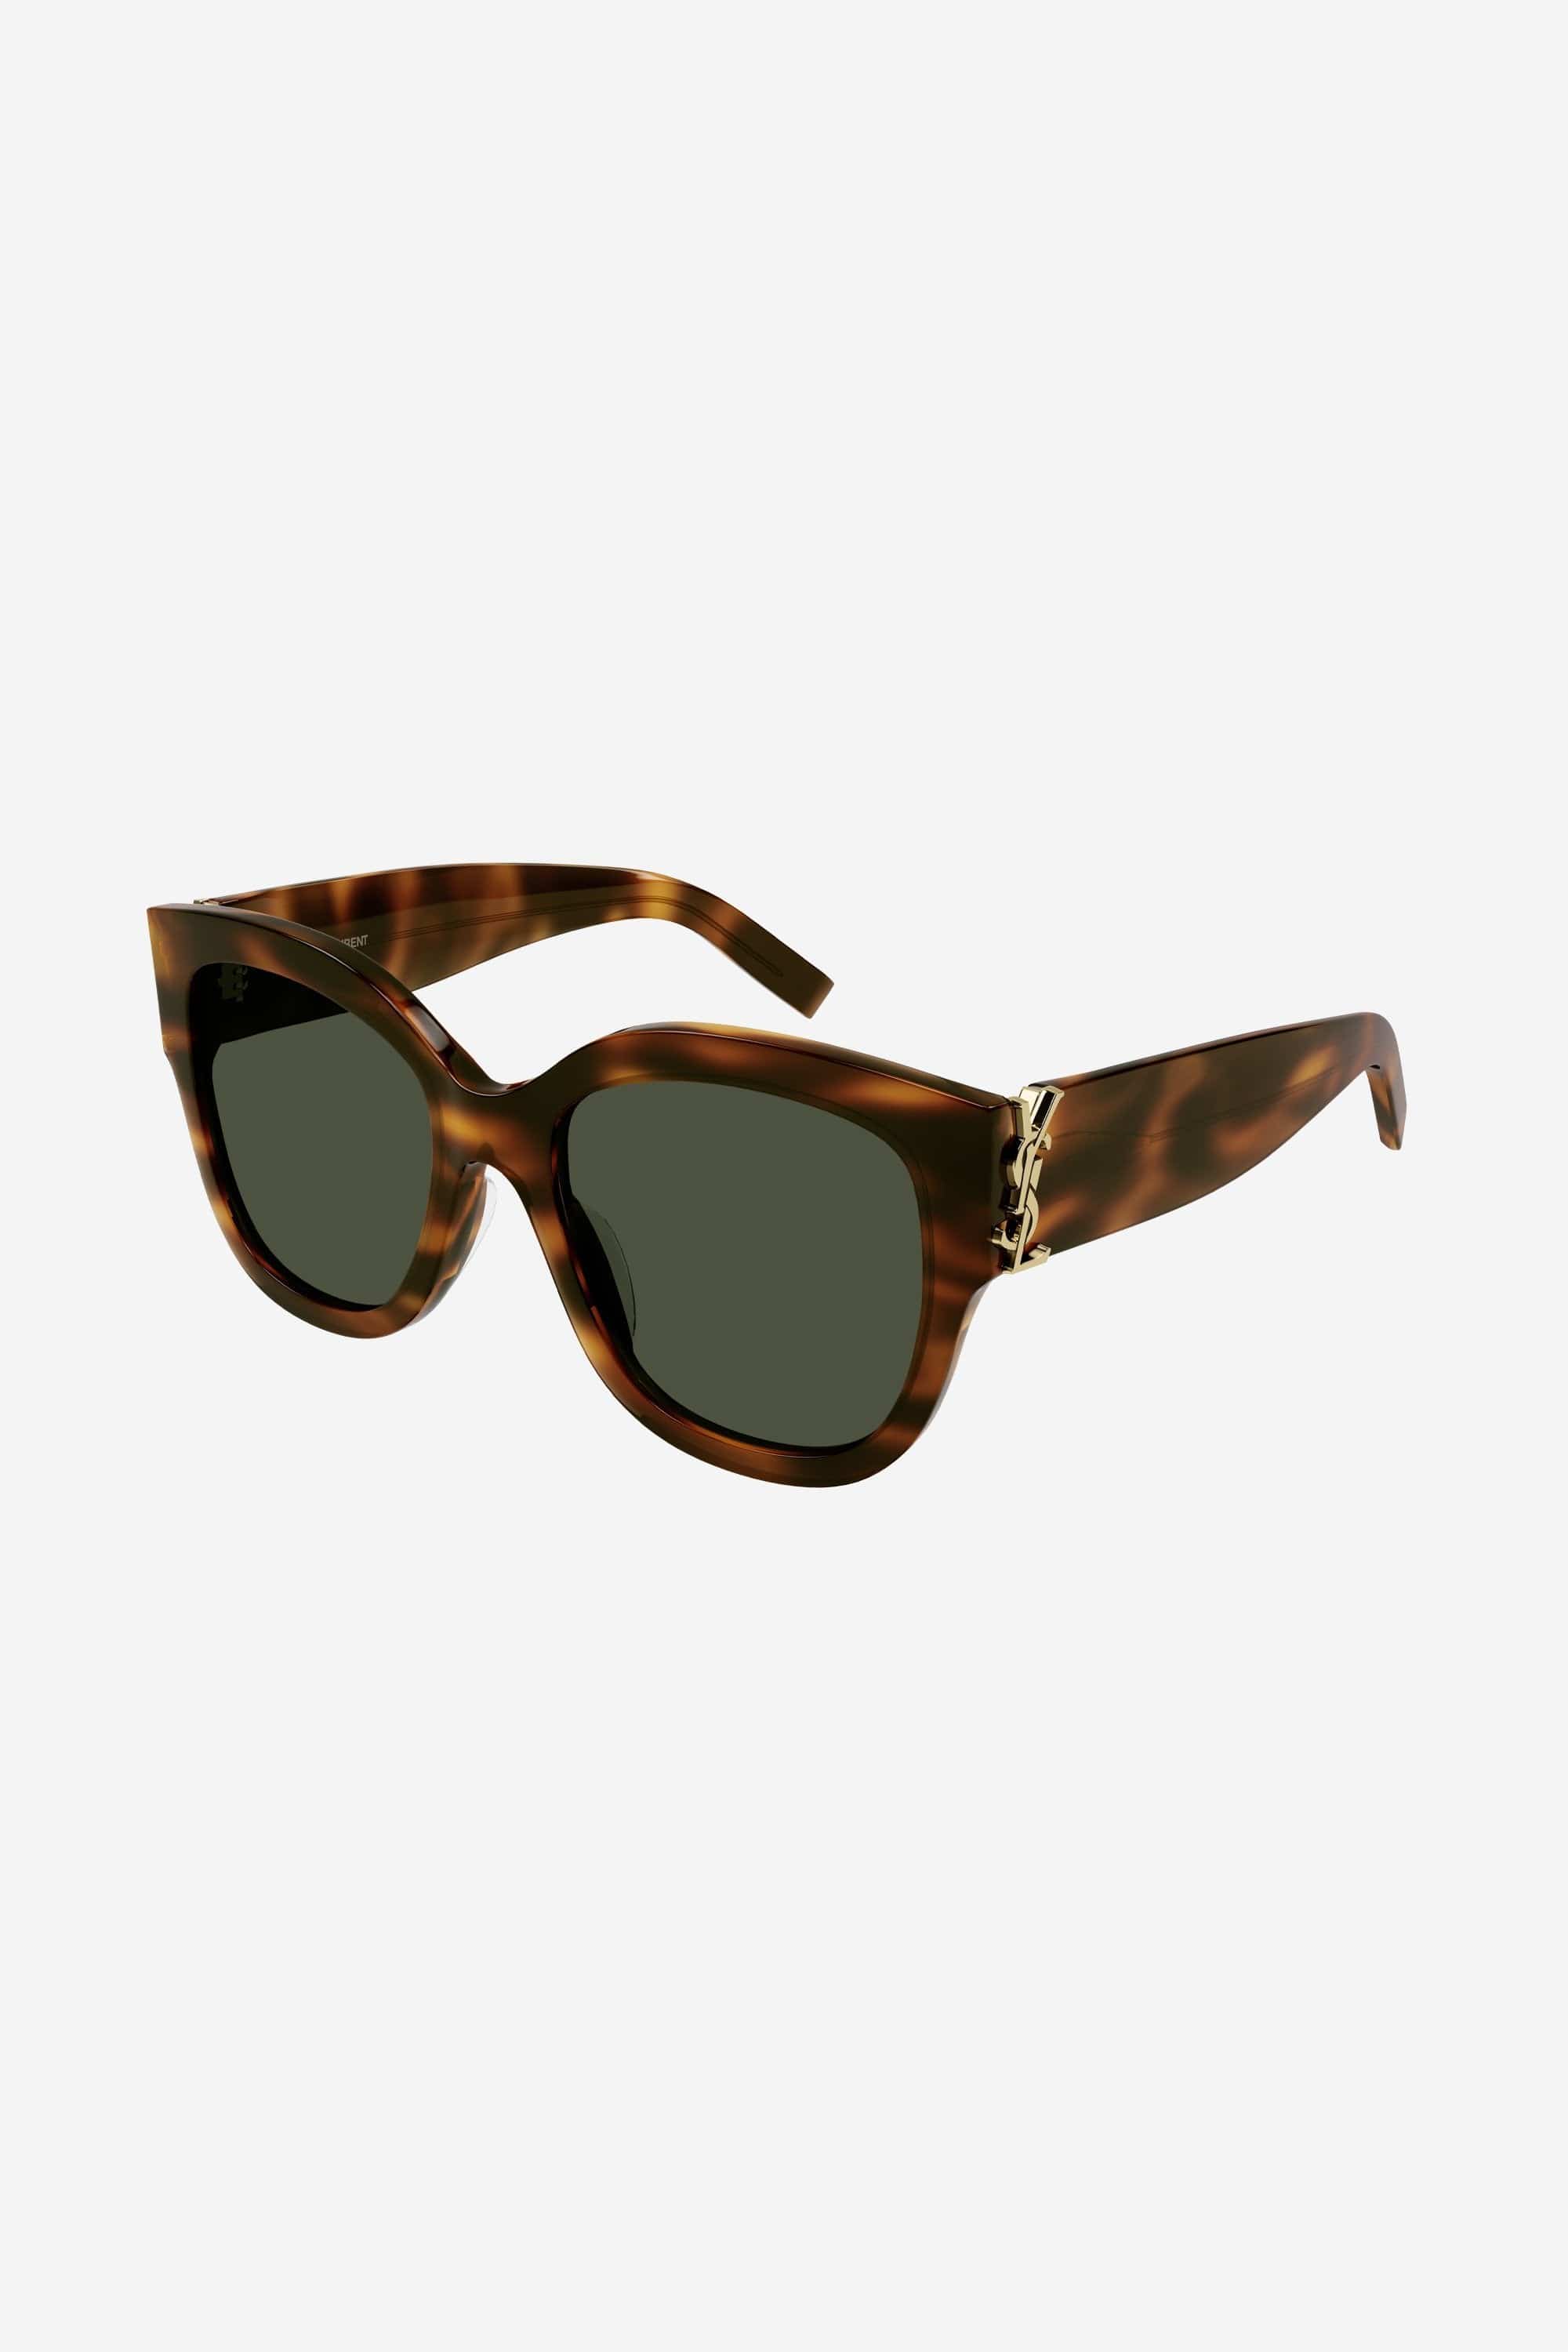 Saint Laurent SL M95 oversized havana cat eye sunglasses - Eyewear Club